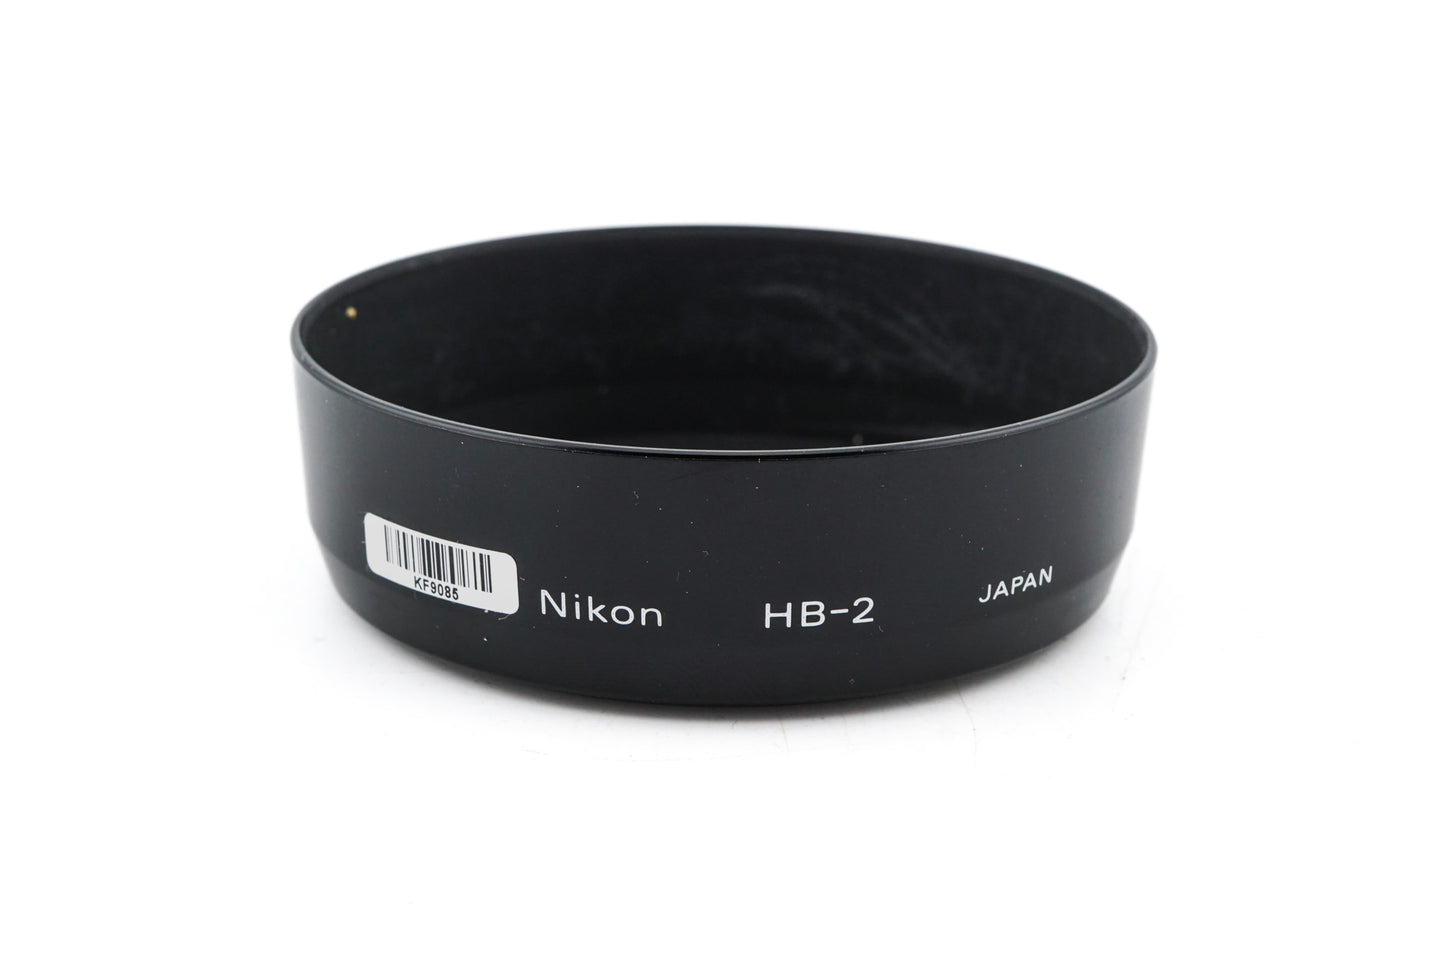 Nikon HB-2 Lens Hood